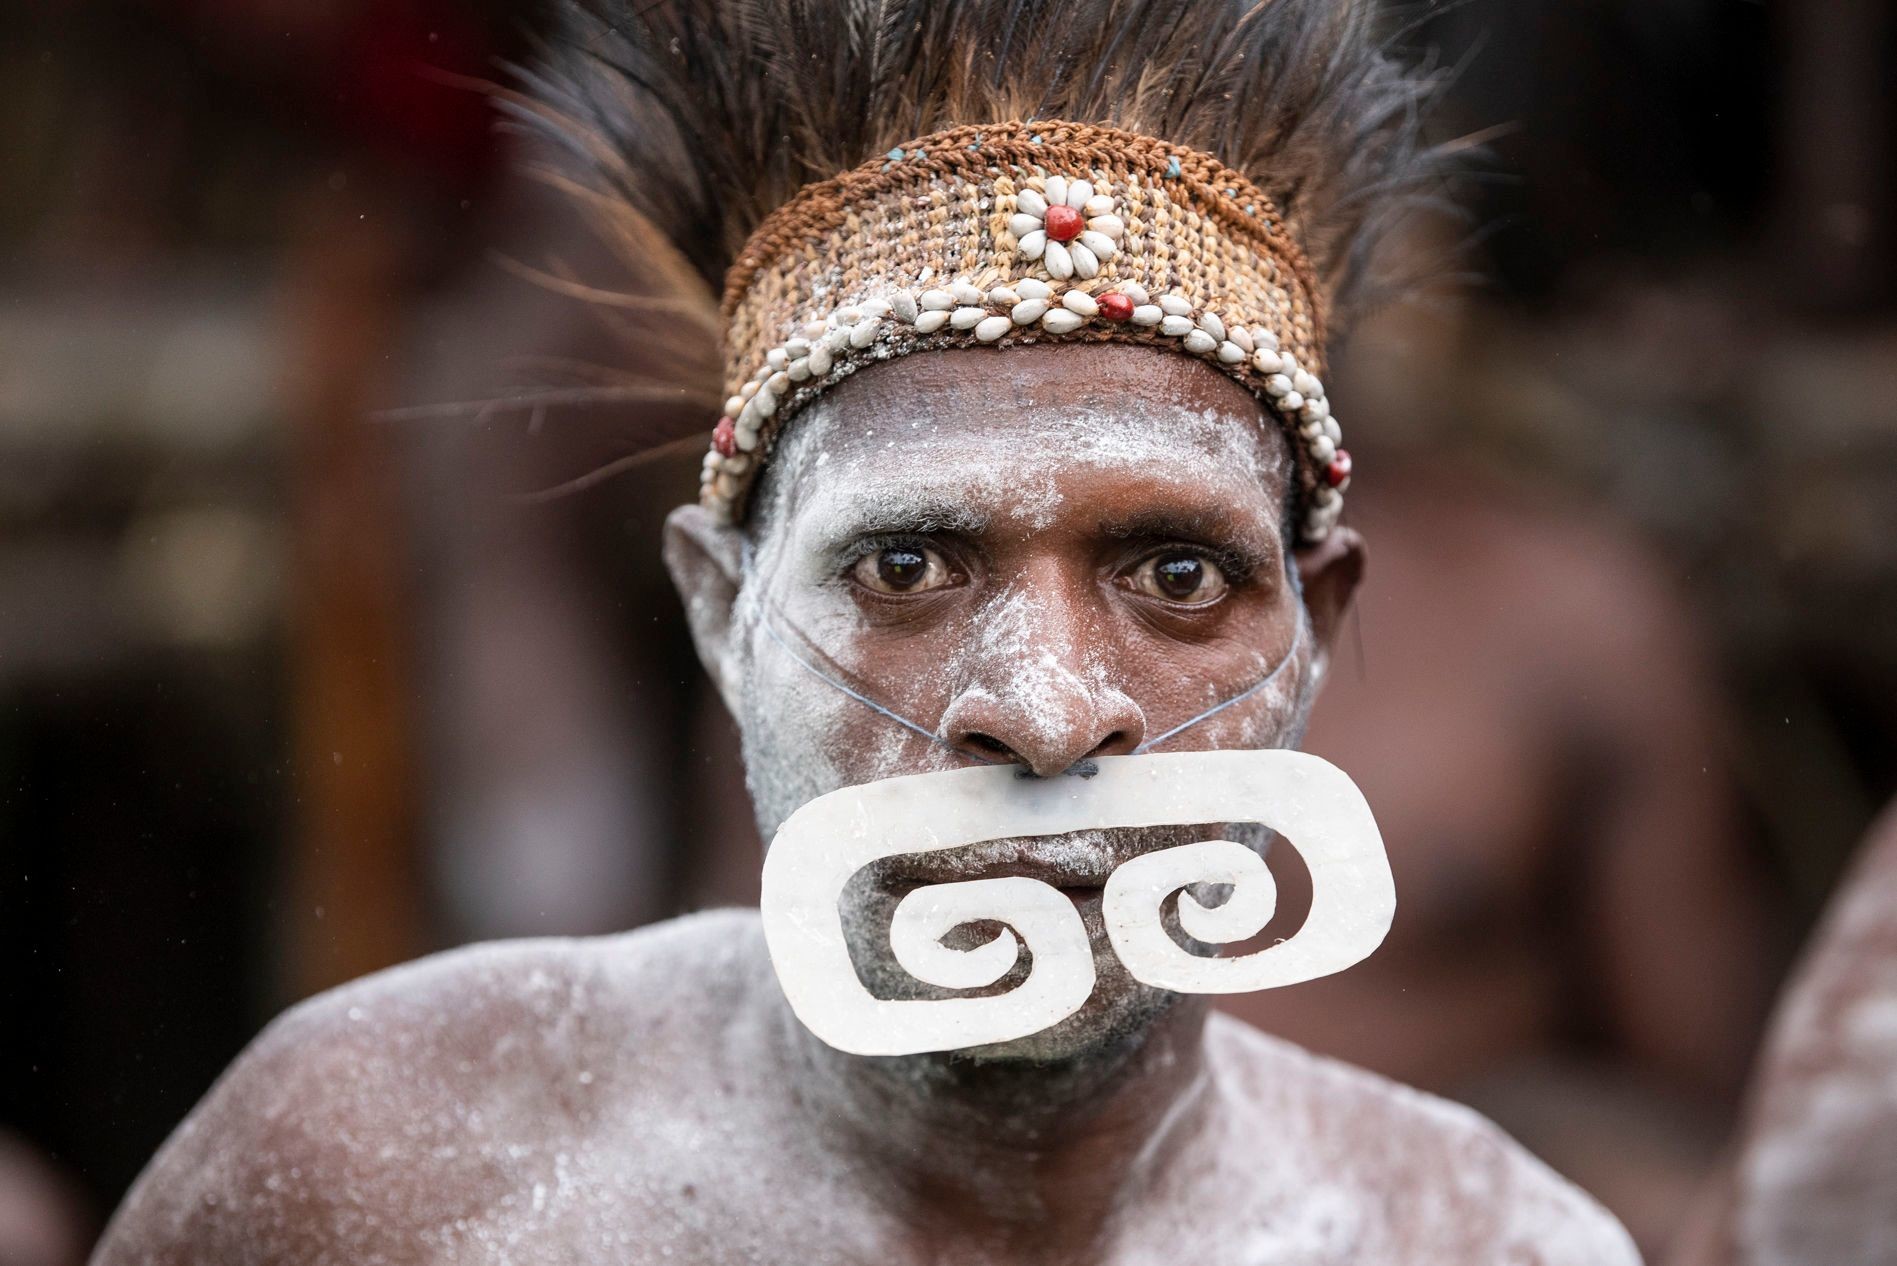 Древнее племя 6 букв. Асматы племя каннибалов. Племя Асмат Папуа новая Гвинея.